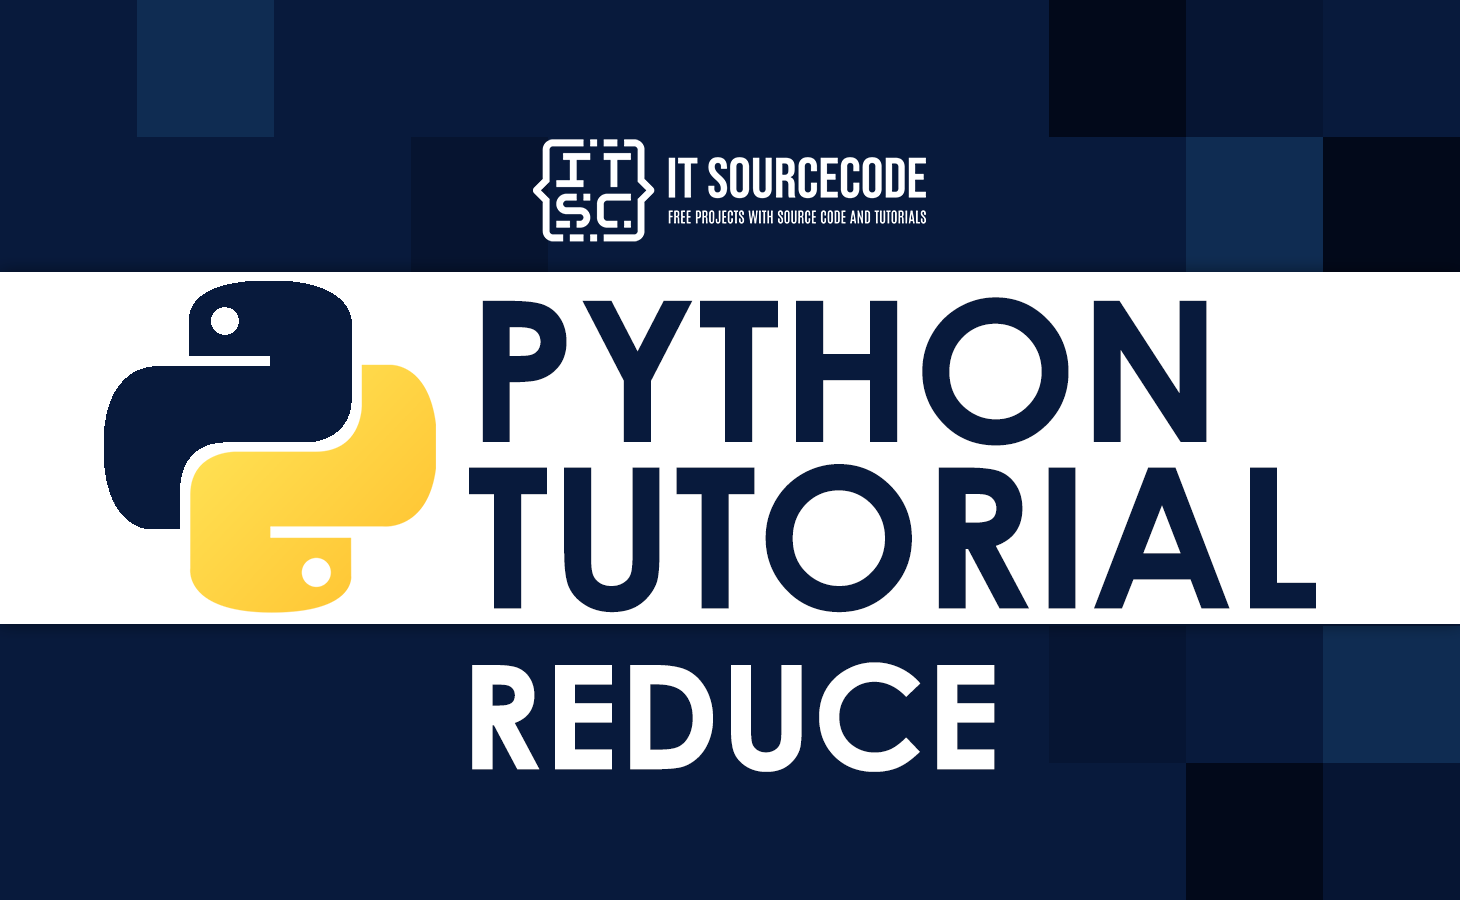 Python Reduce